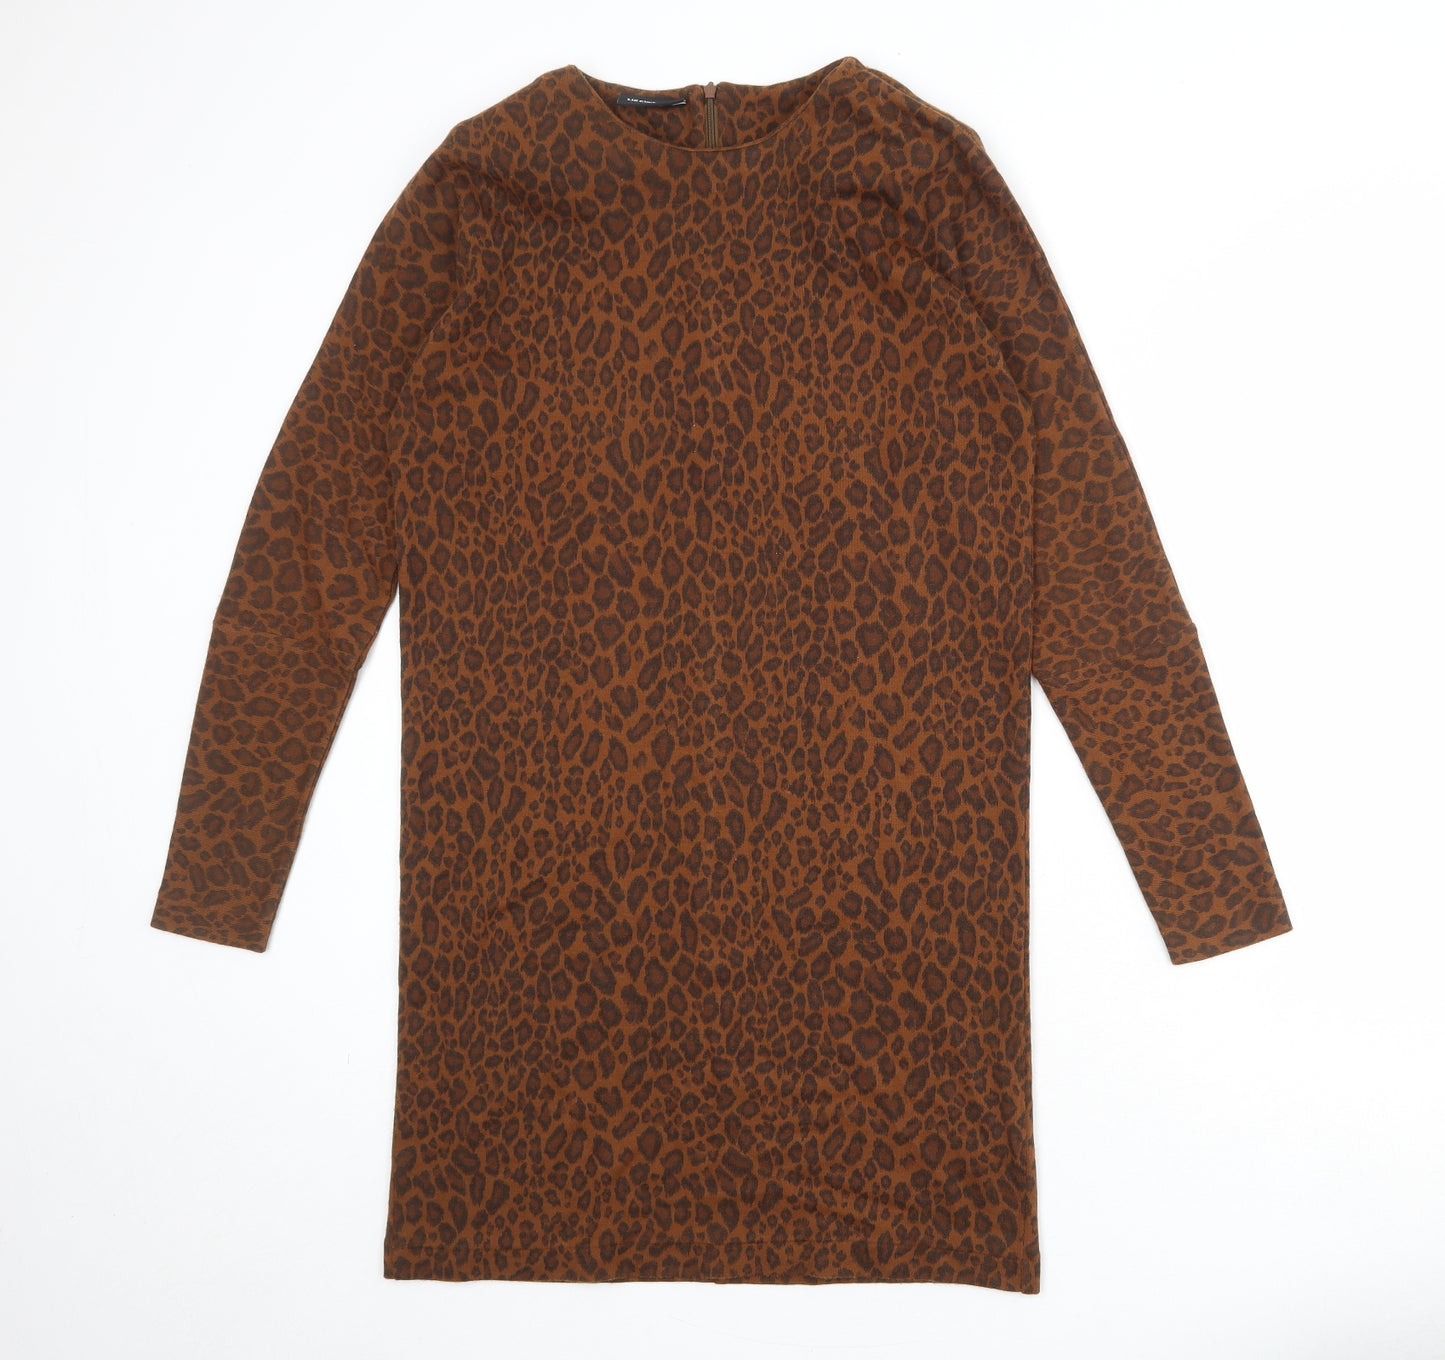 Liz Claiborne Womens Brown Animal Print Acrylic Jumper Dress Size S Round Neck Zip - Leopard Pattern